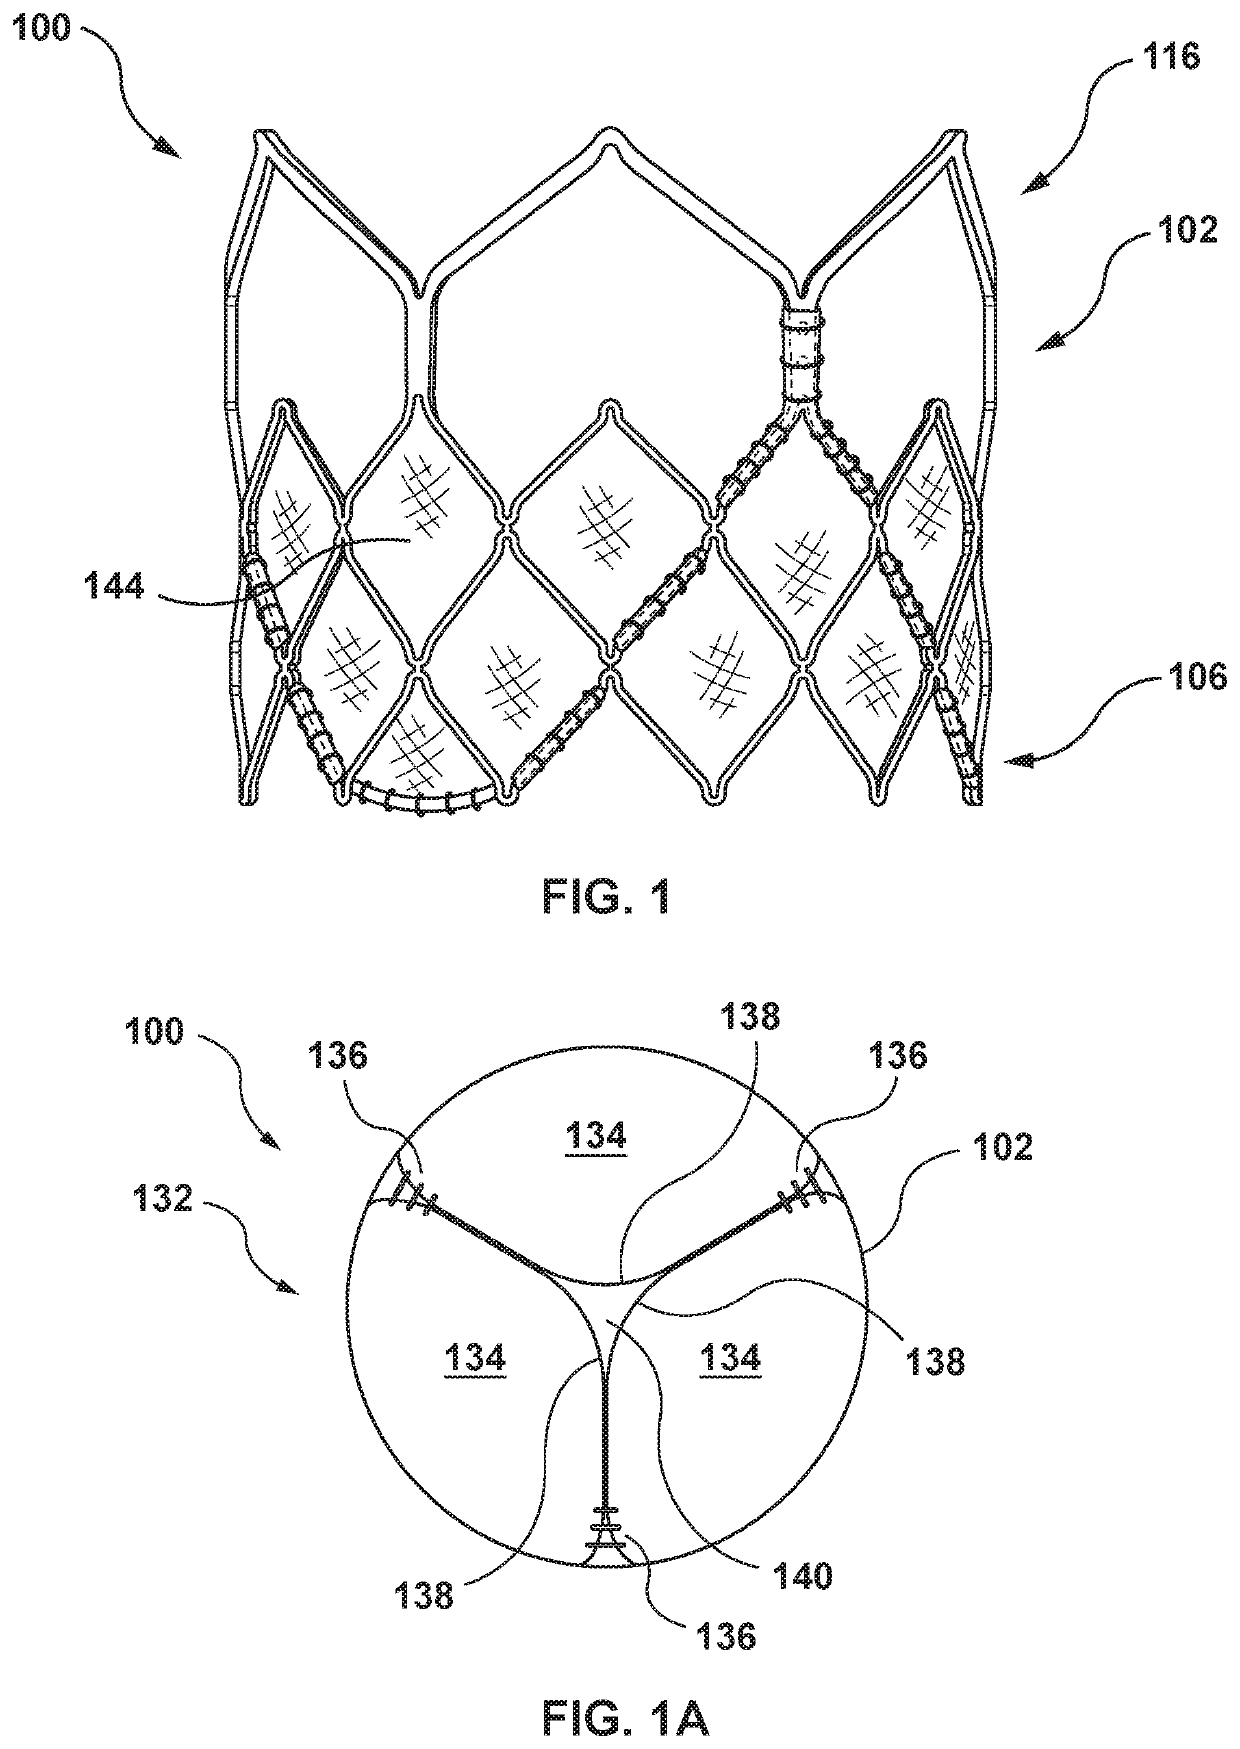 Balloon expandable frame for transcatheter implantation of a cardiac valve prosthesis